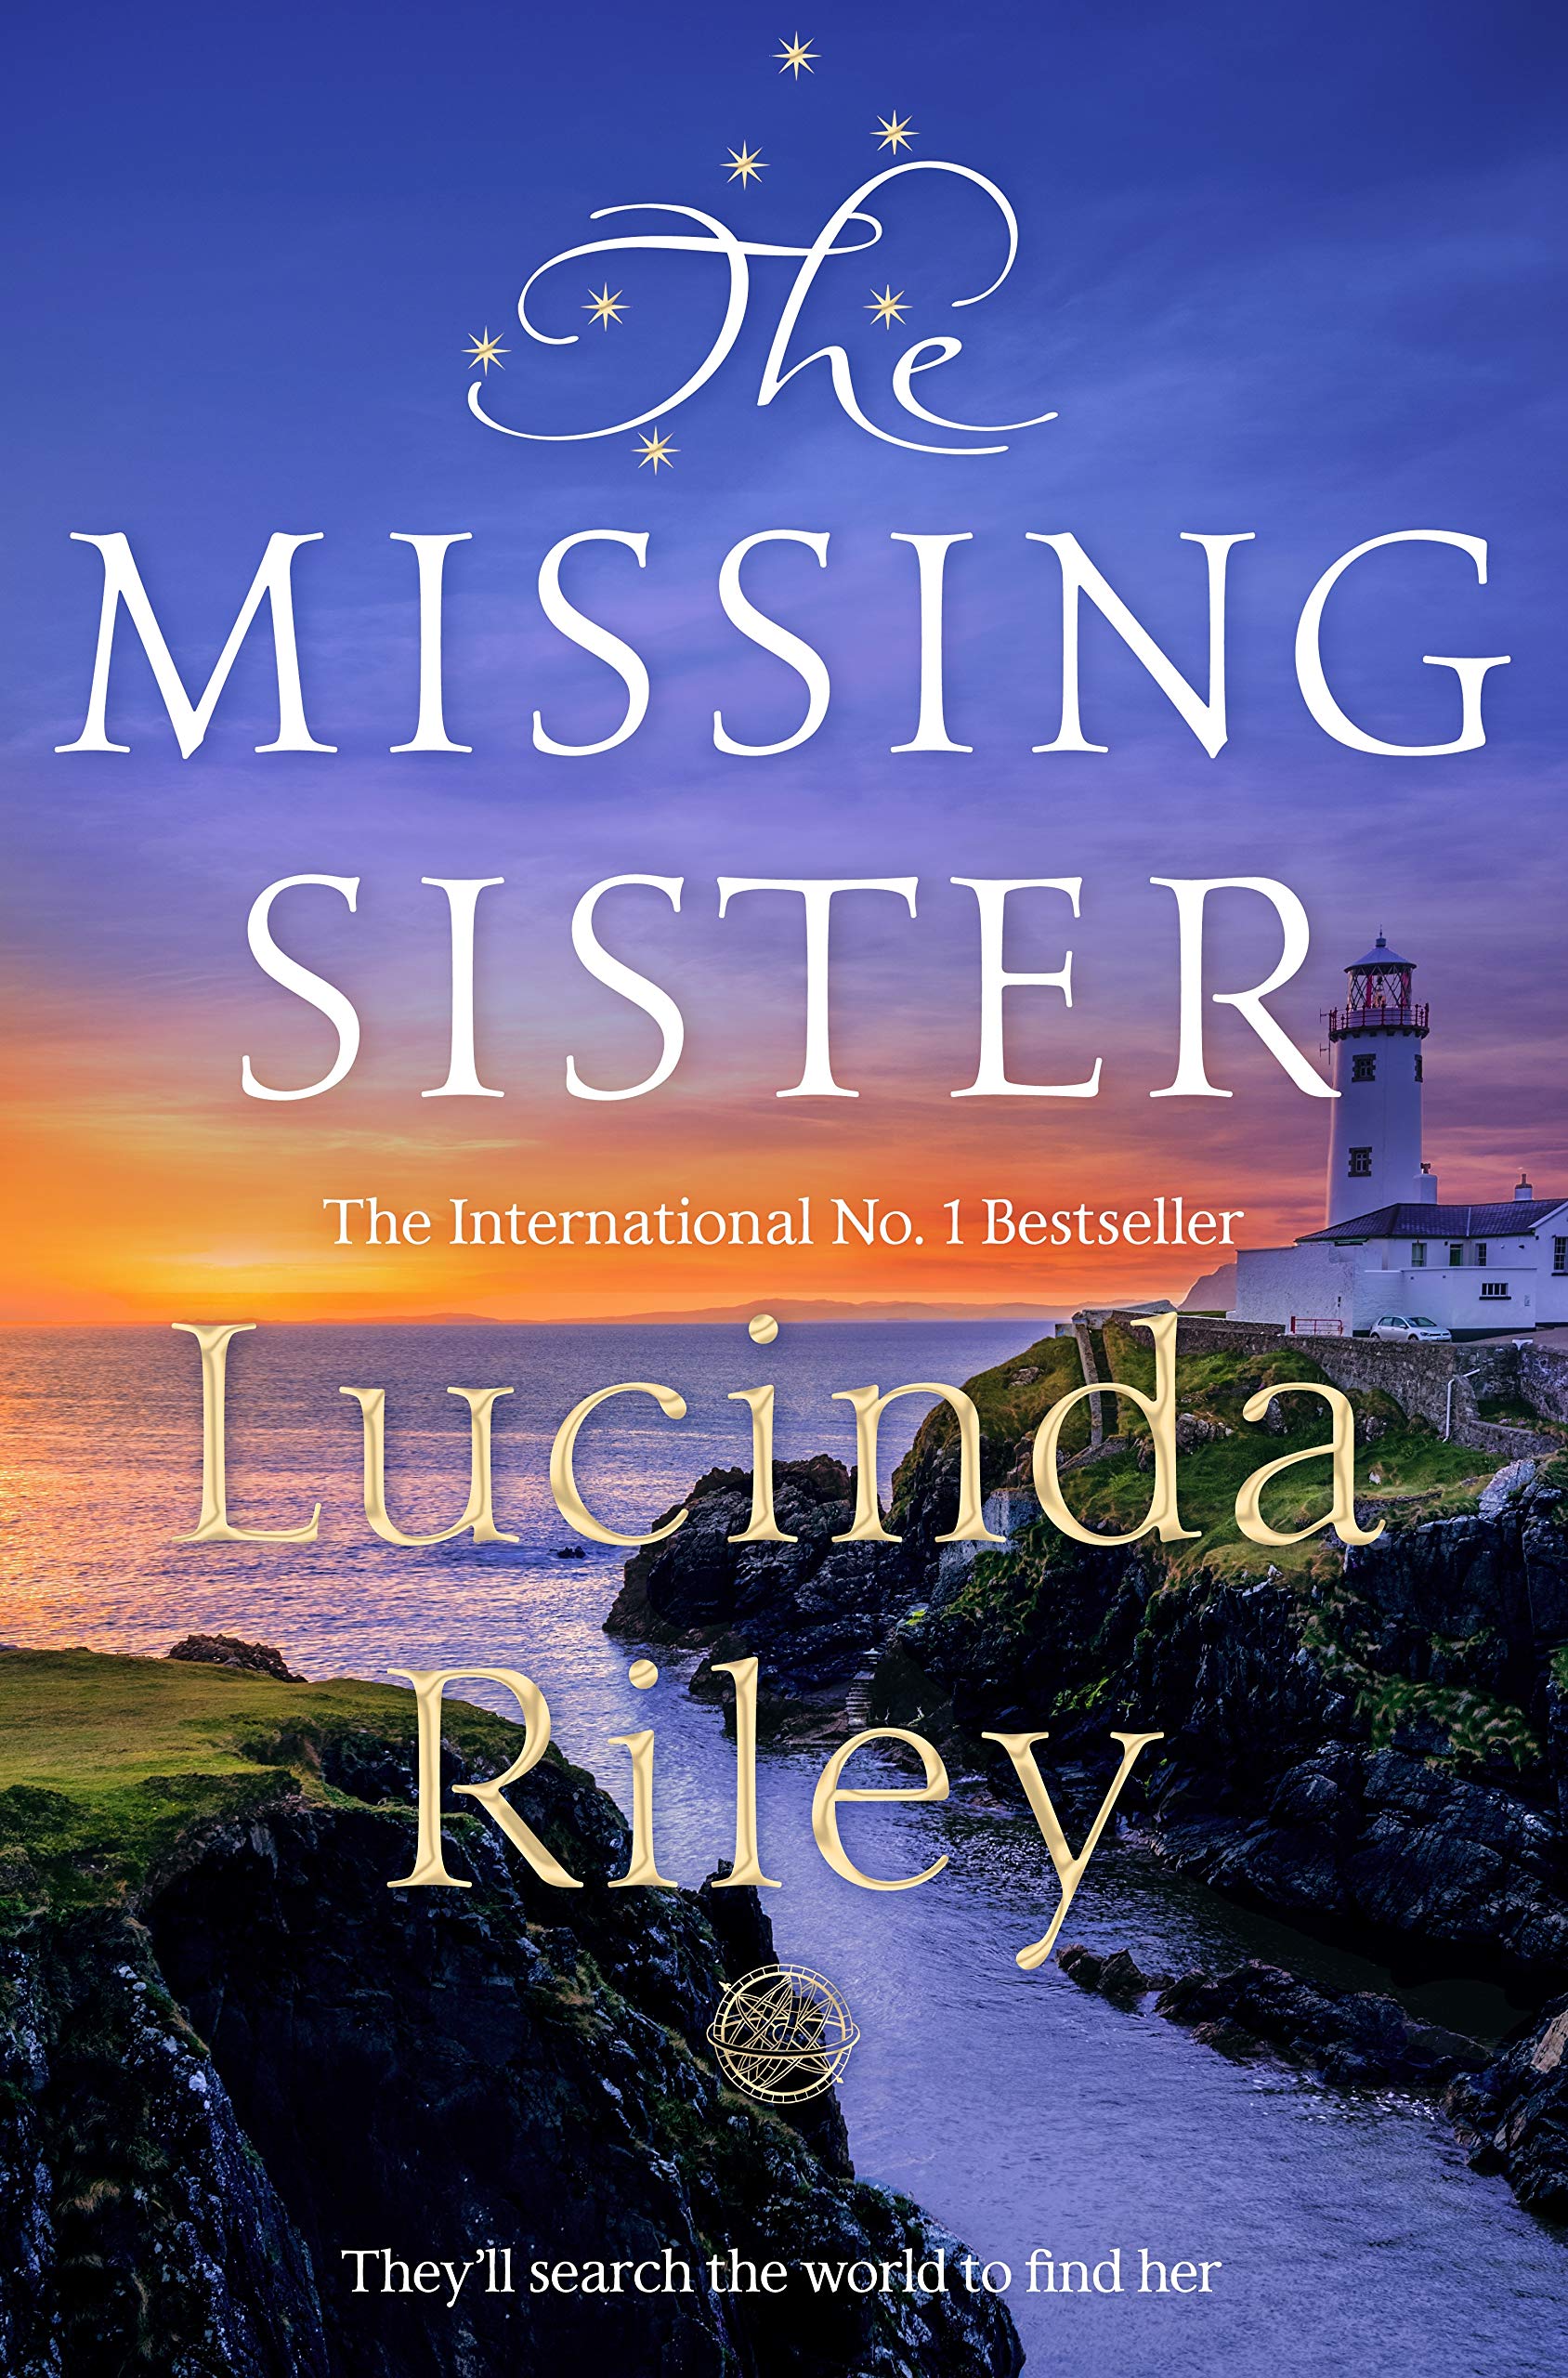 The Last First Kiss - Author Lucinda Race